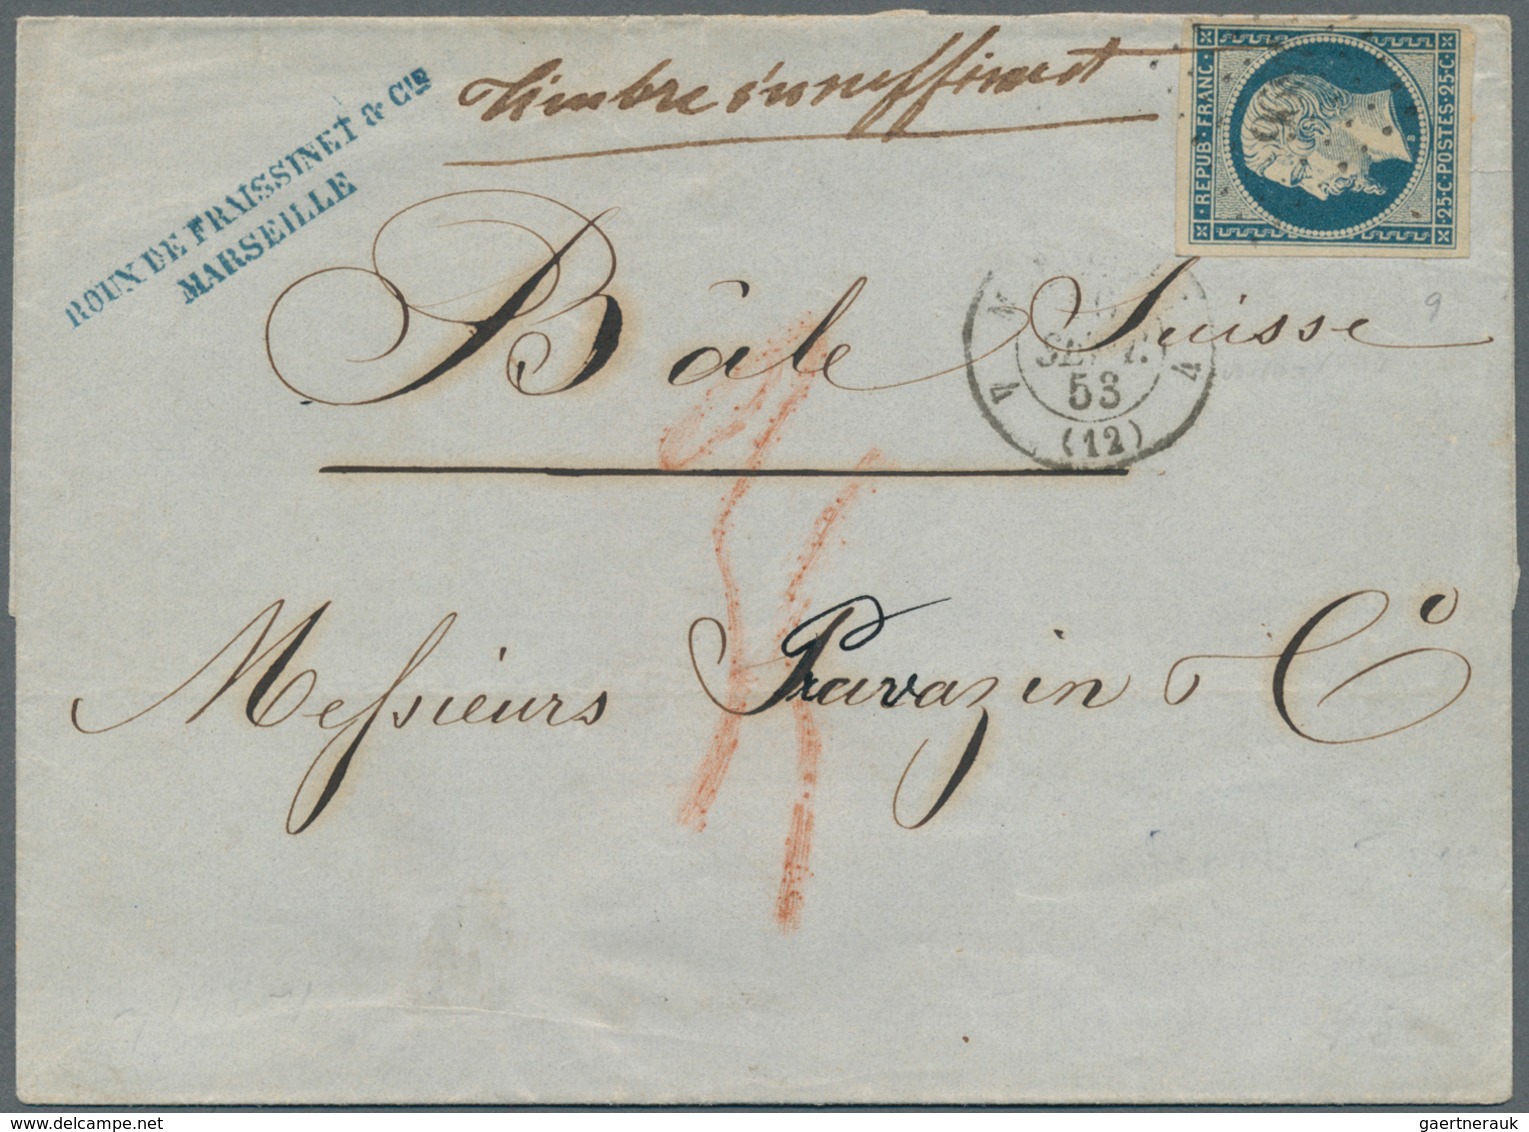 Frankreich: 1854/1868, NAPOLEON NON DENTELE/DENTELE, assortment of 39 entires incl. two single frank